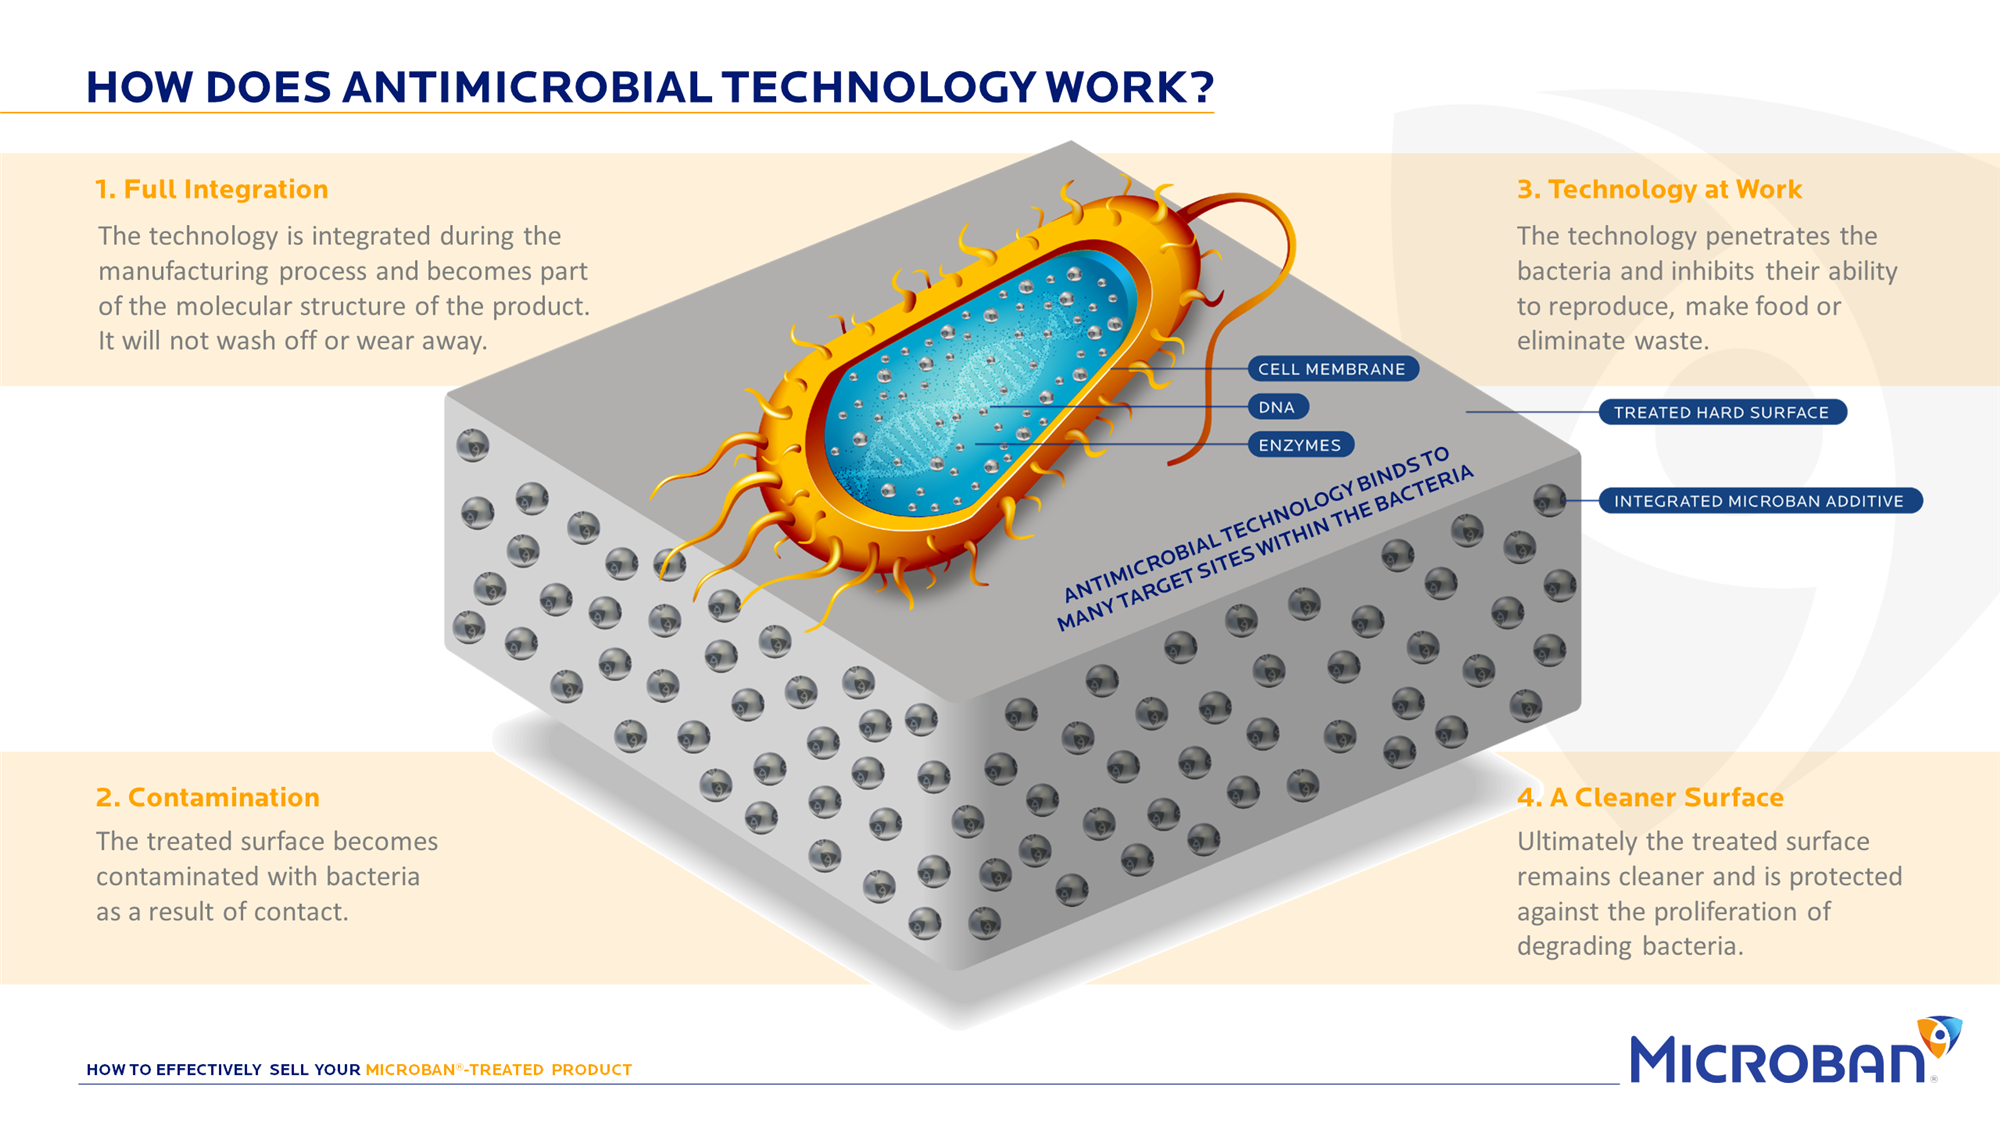 Microban antimicrobial technology